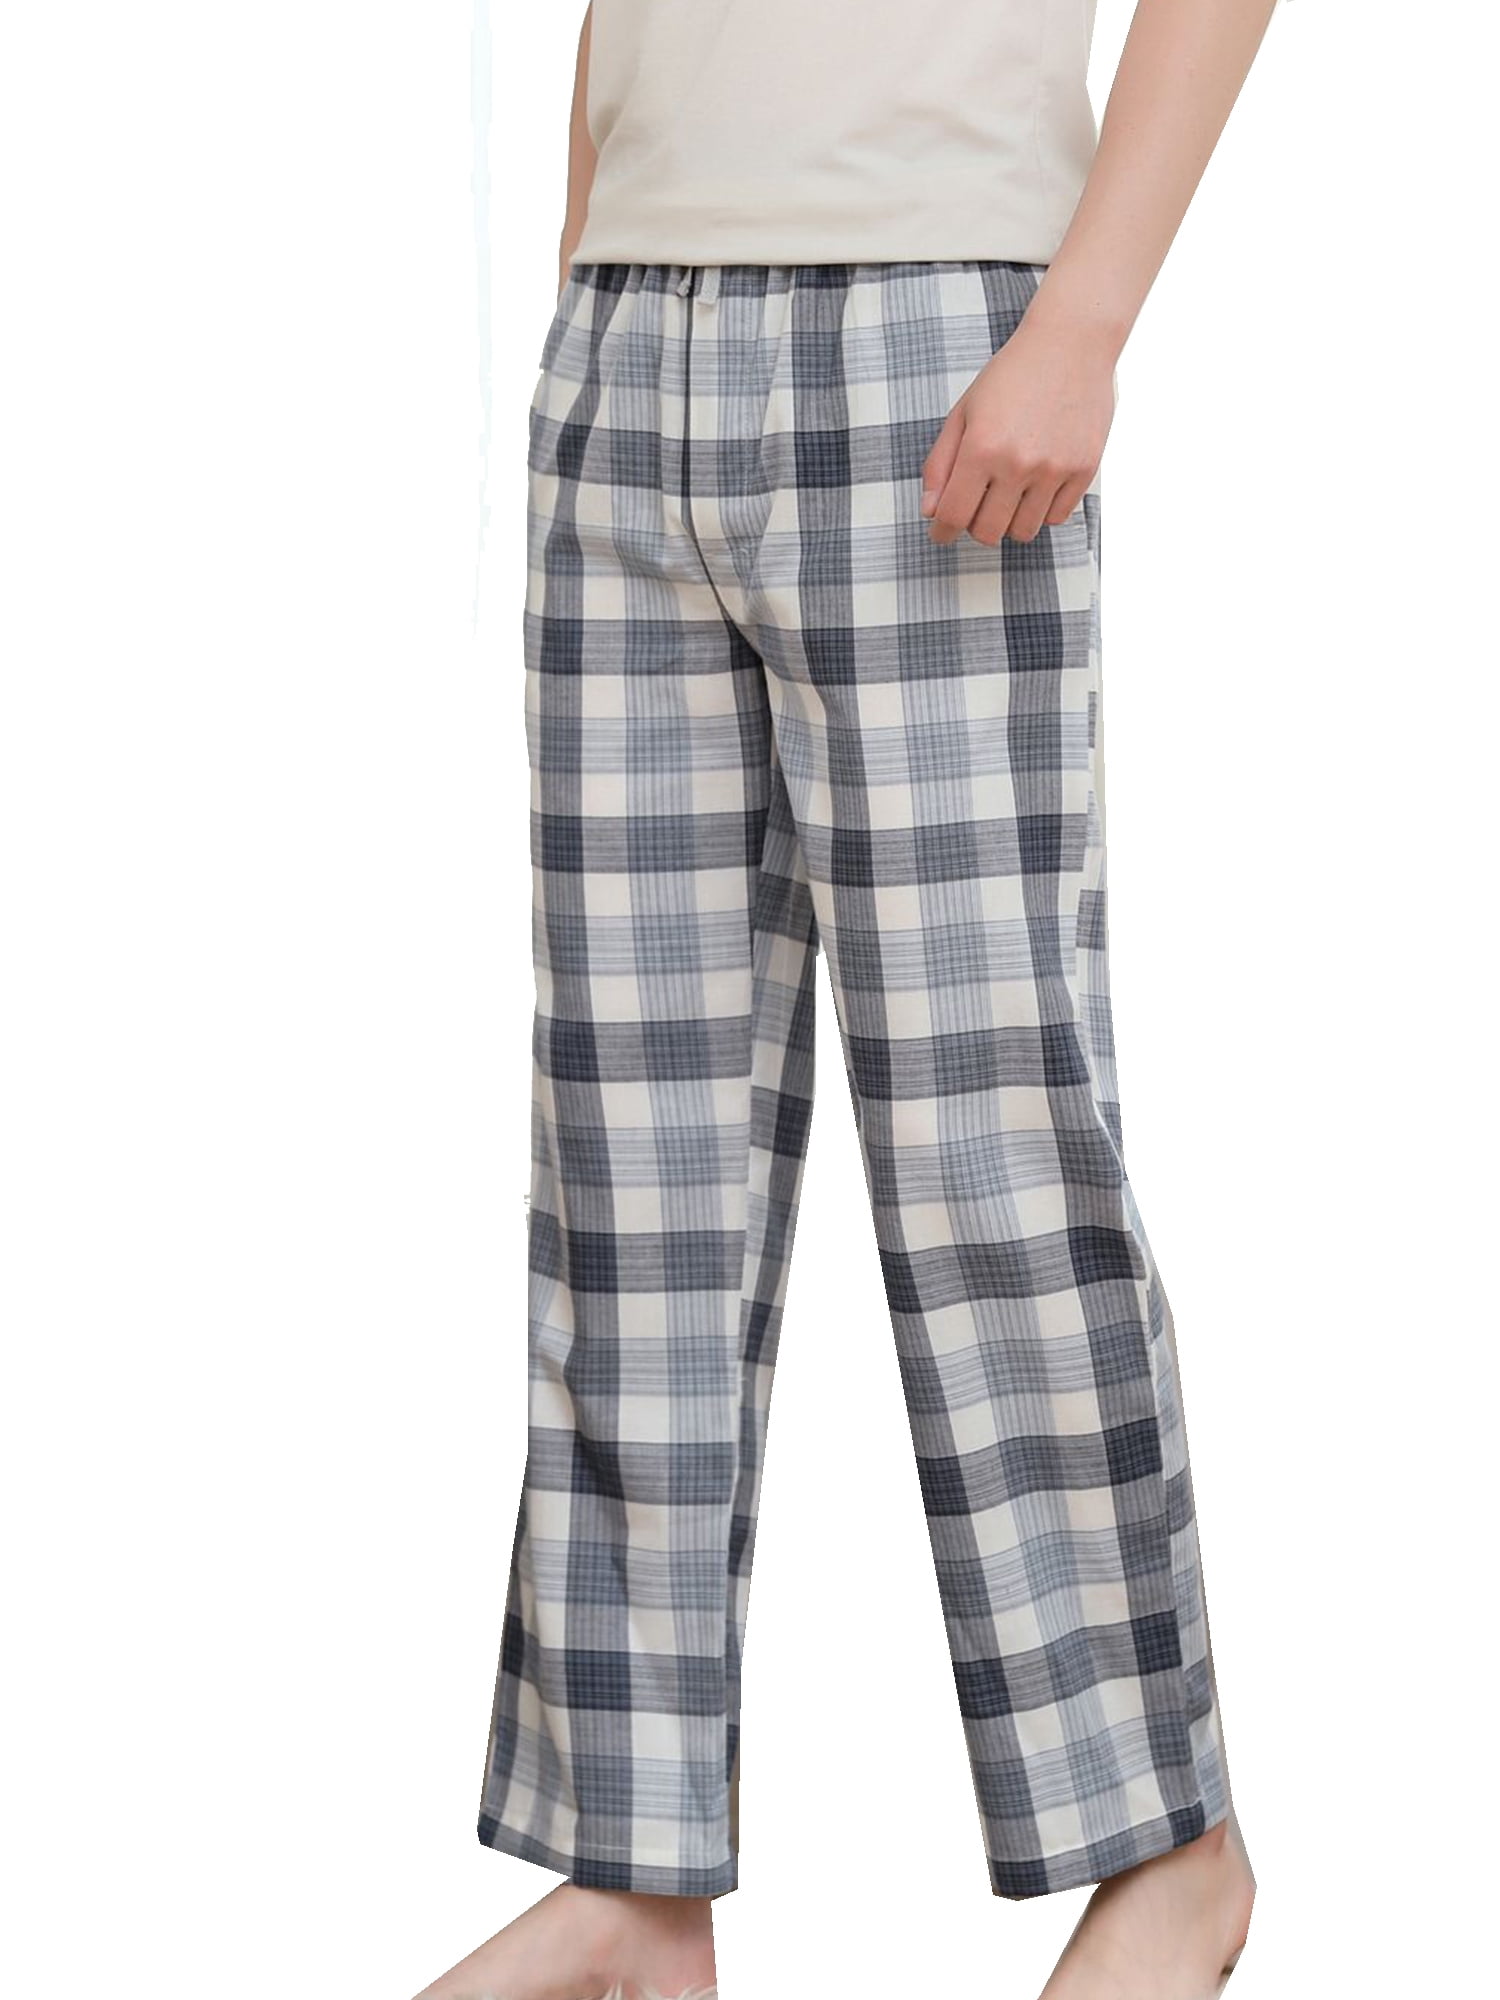 AMERICAN HEAVEN Mens 3 Pack Lounge Pajama Sleep Pants/Drawstring & Pockets Designer Woven Pant Bottoms 